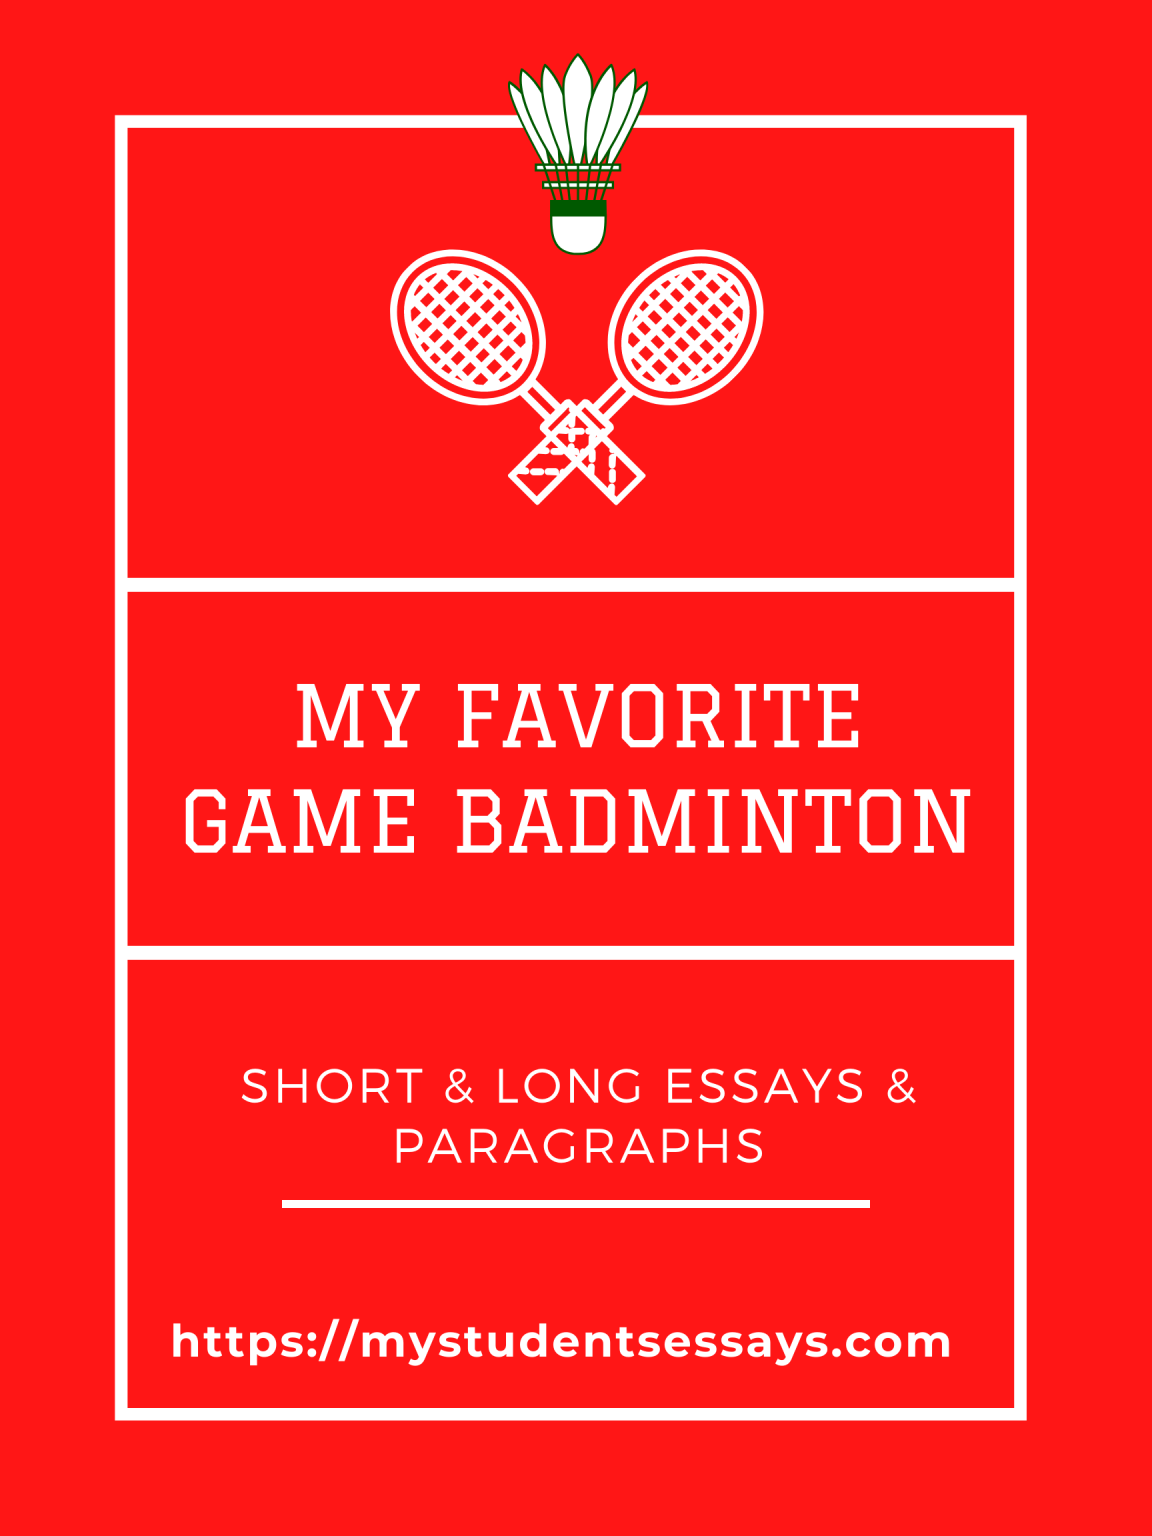 my favorite game essay badminton